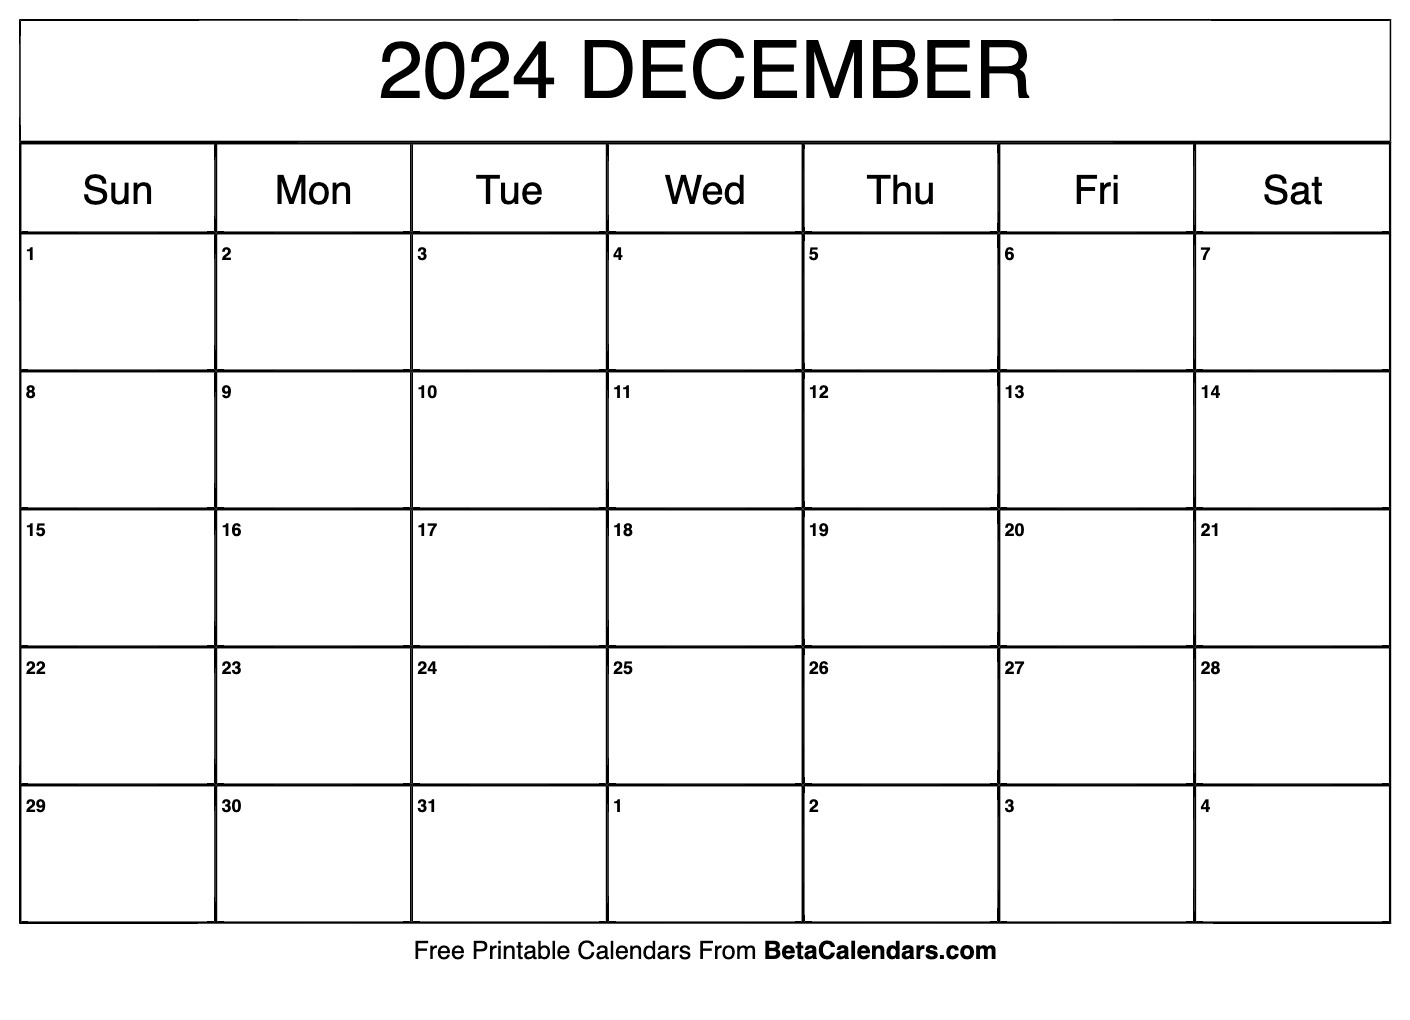 Free Printable December 2024 Calendar | Printable Calendar 2024 December